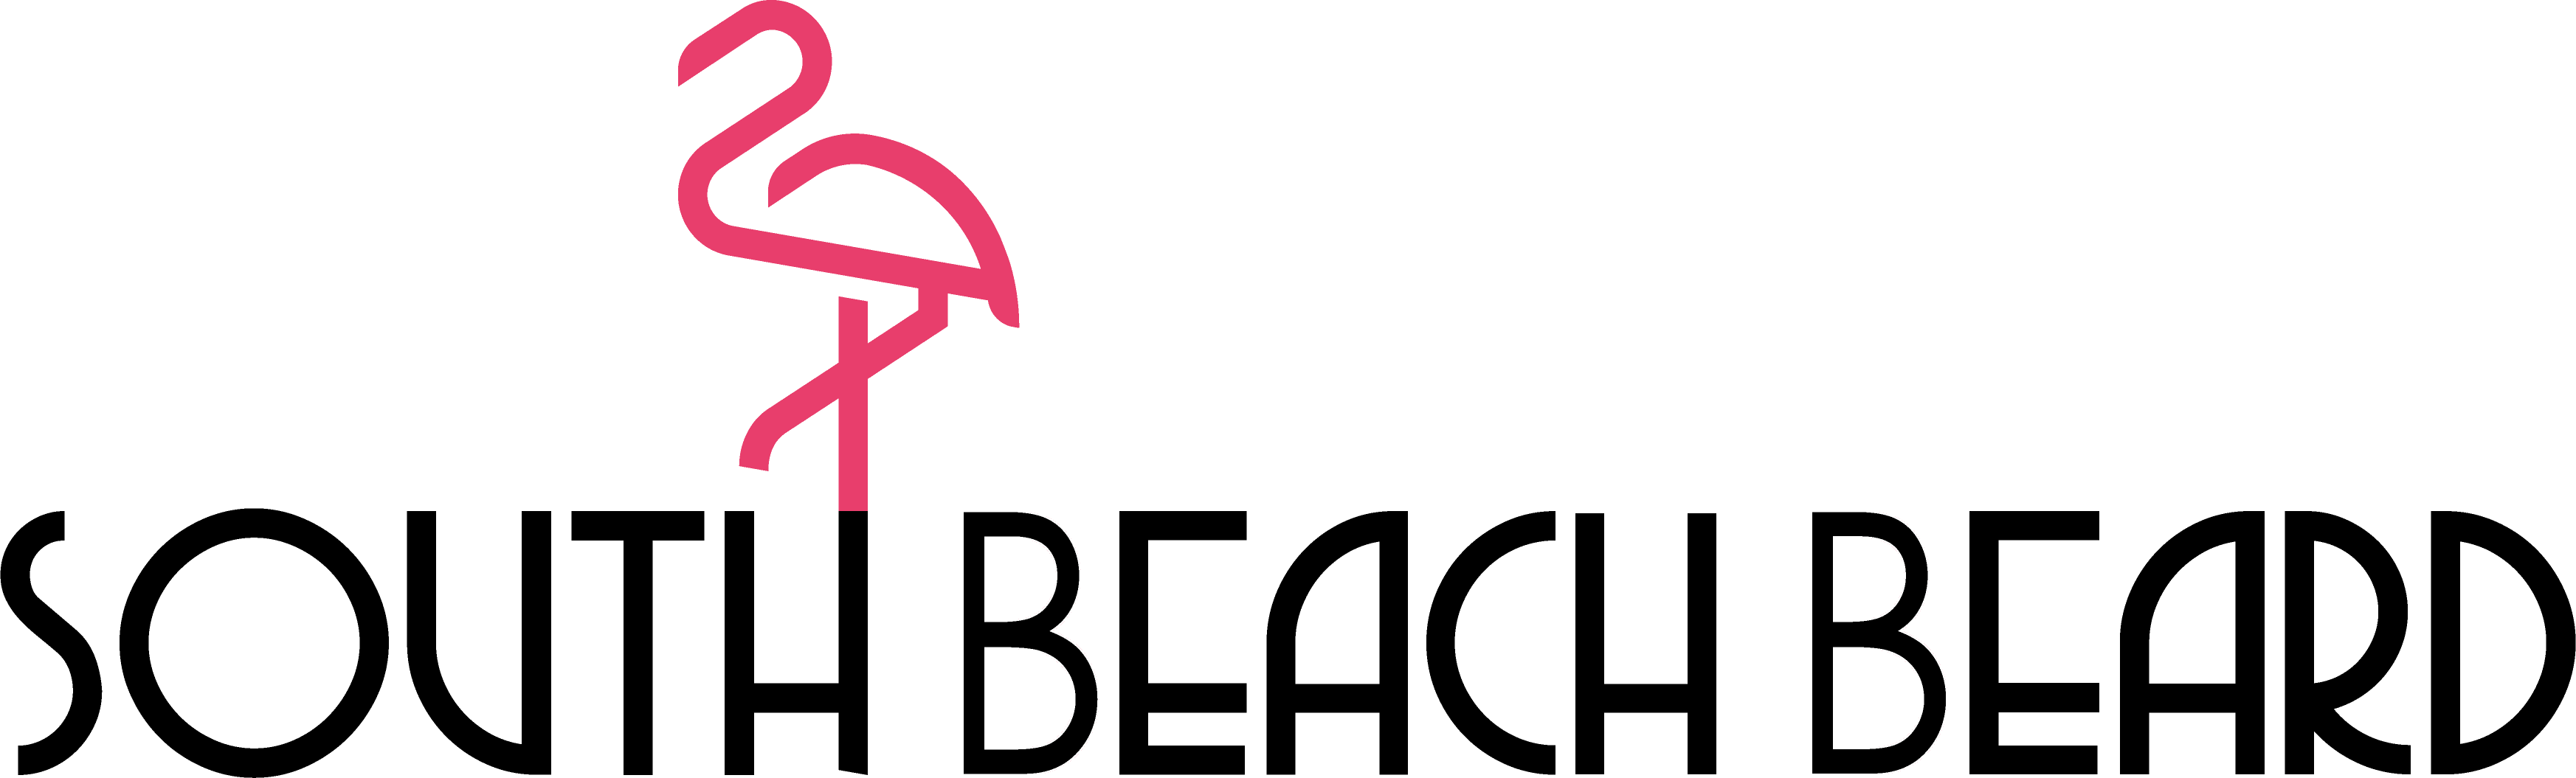 South Beach Beard Logo